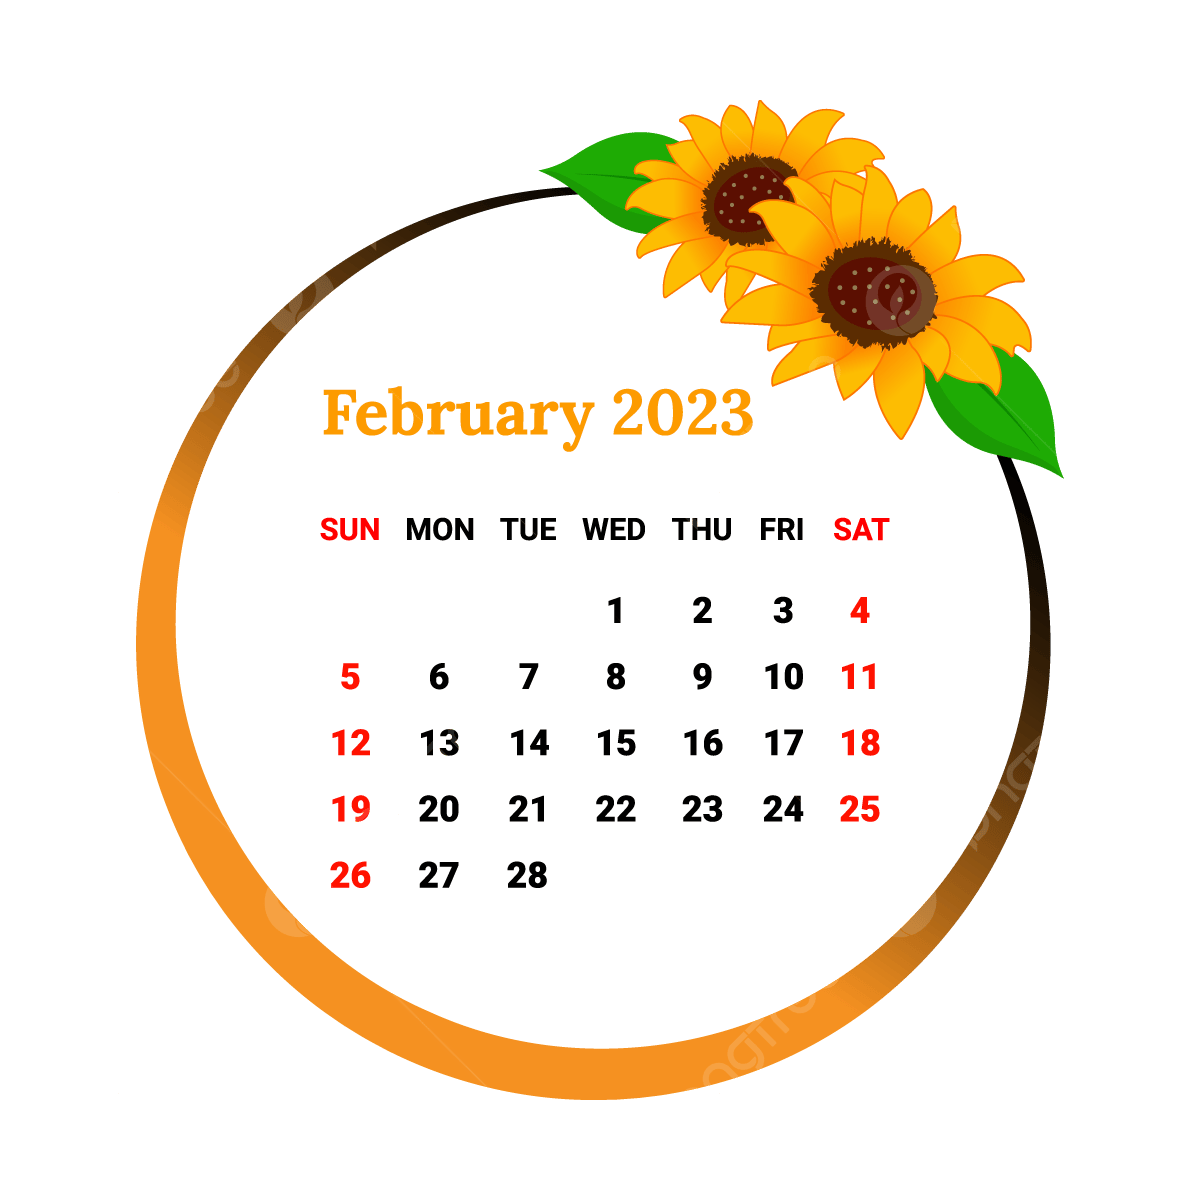 February 2023 Calendar Vector Art PNG, 2023 February Month Calendar, Monthly Calendar, Calendar 2023 PNG Image For Free Download